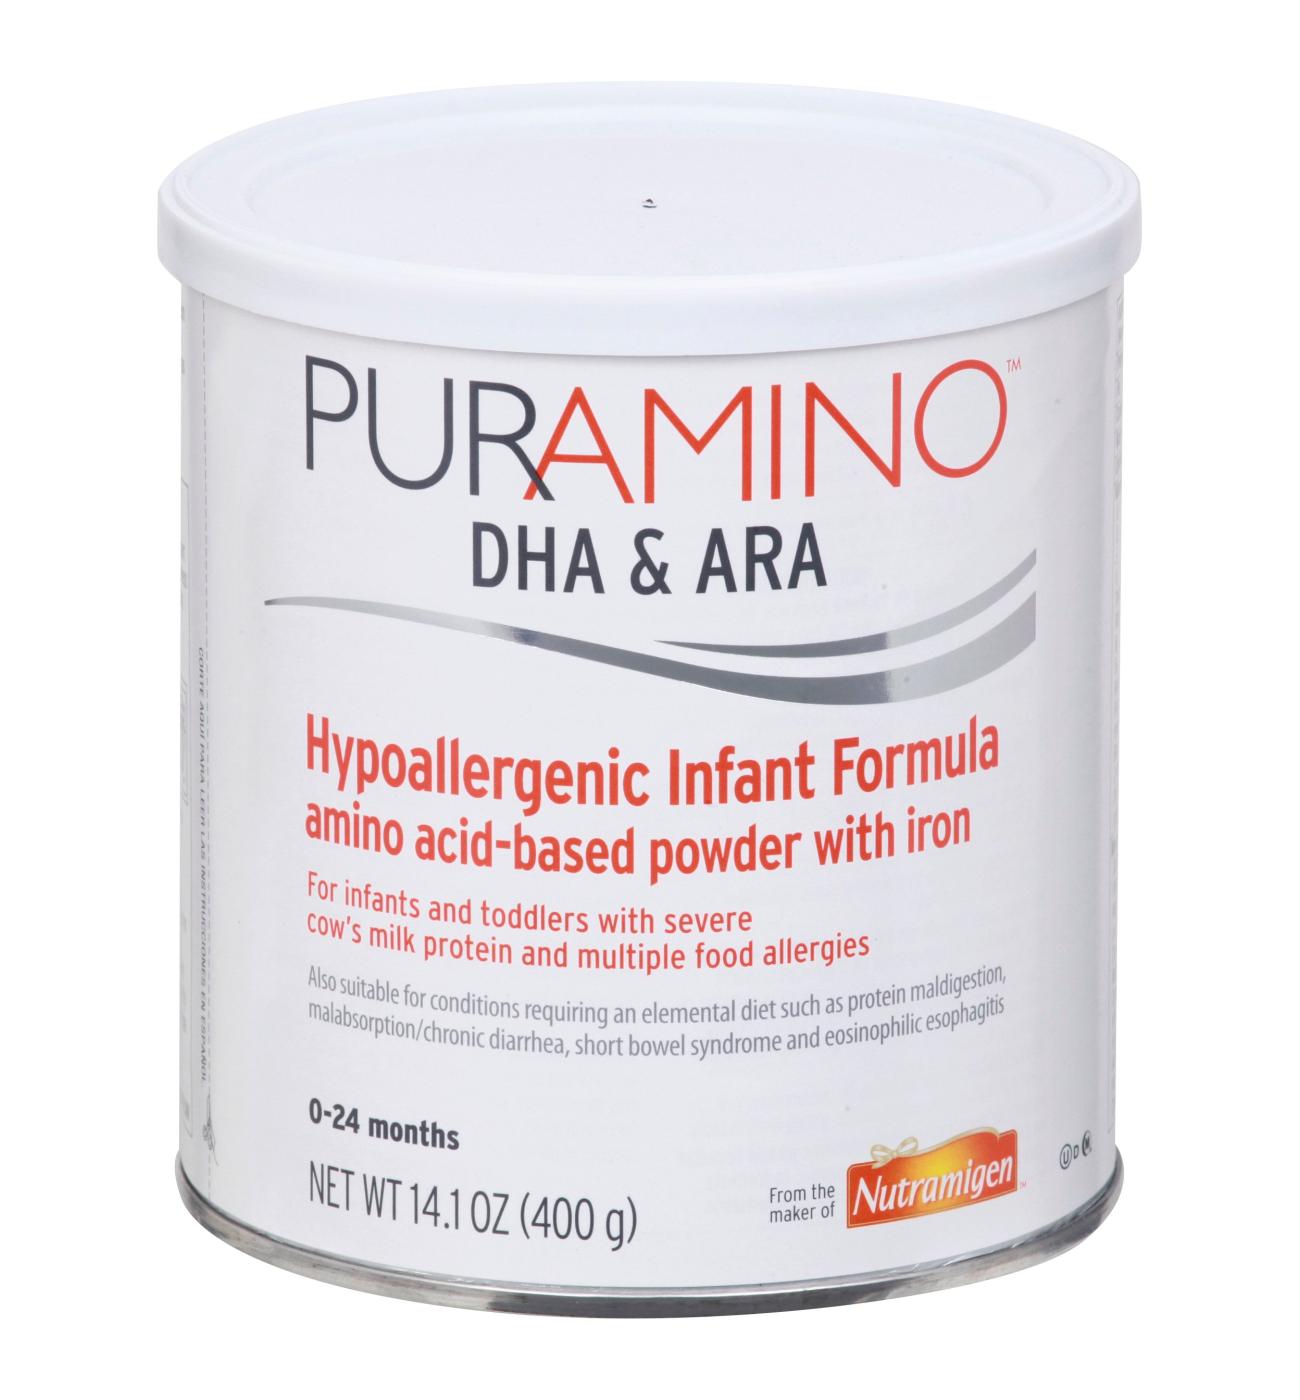 Puramino DHA & ARA Hypoallergenic Powder Infant Formula with Iron; image 1 of 2